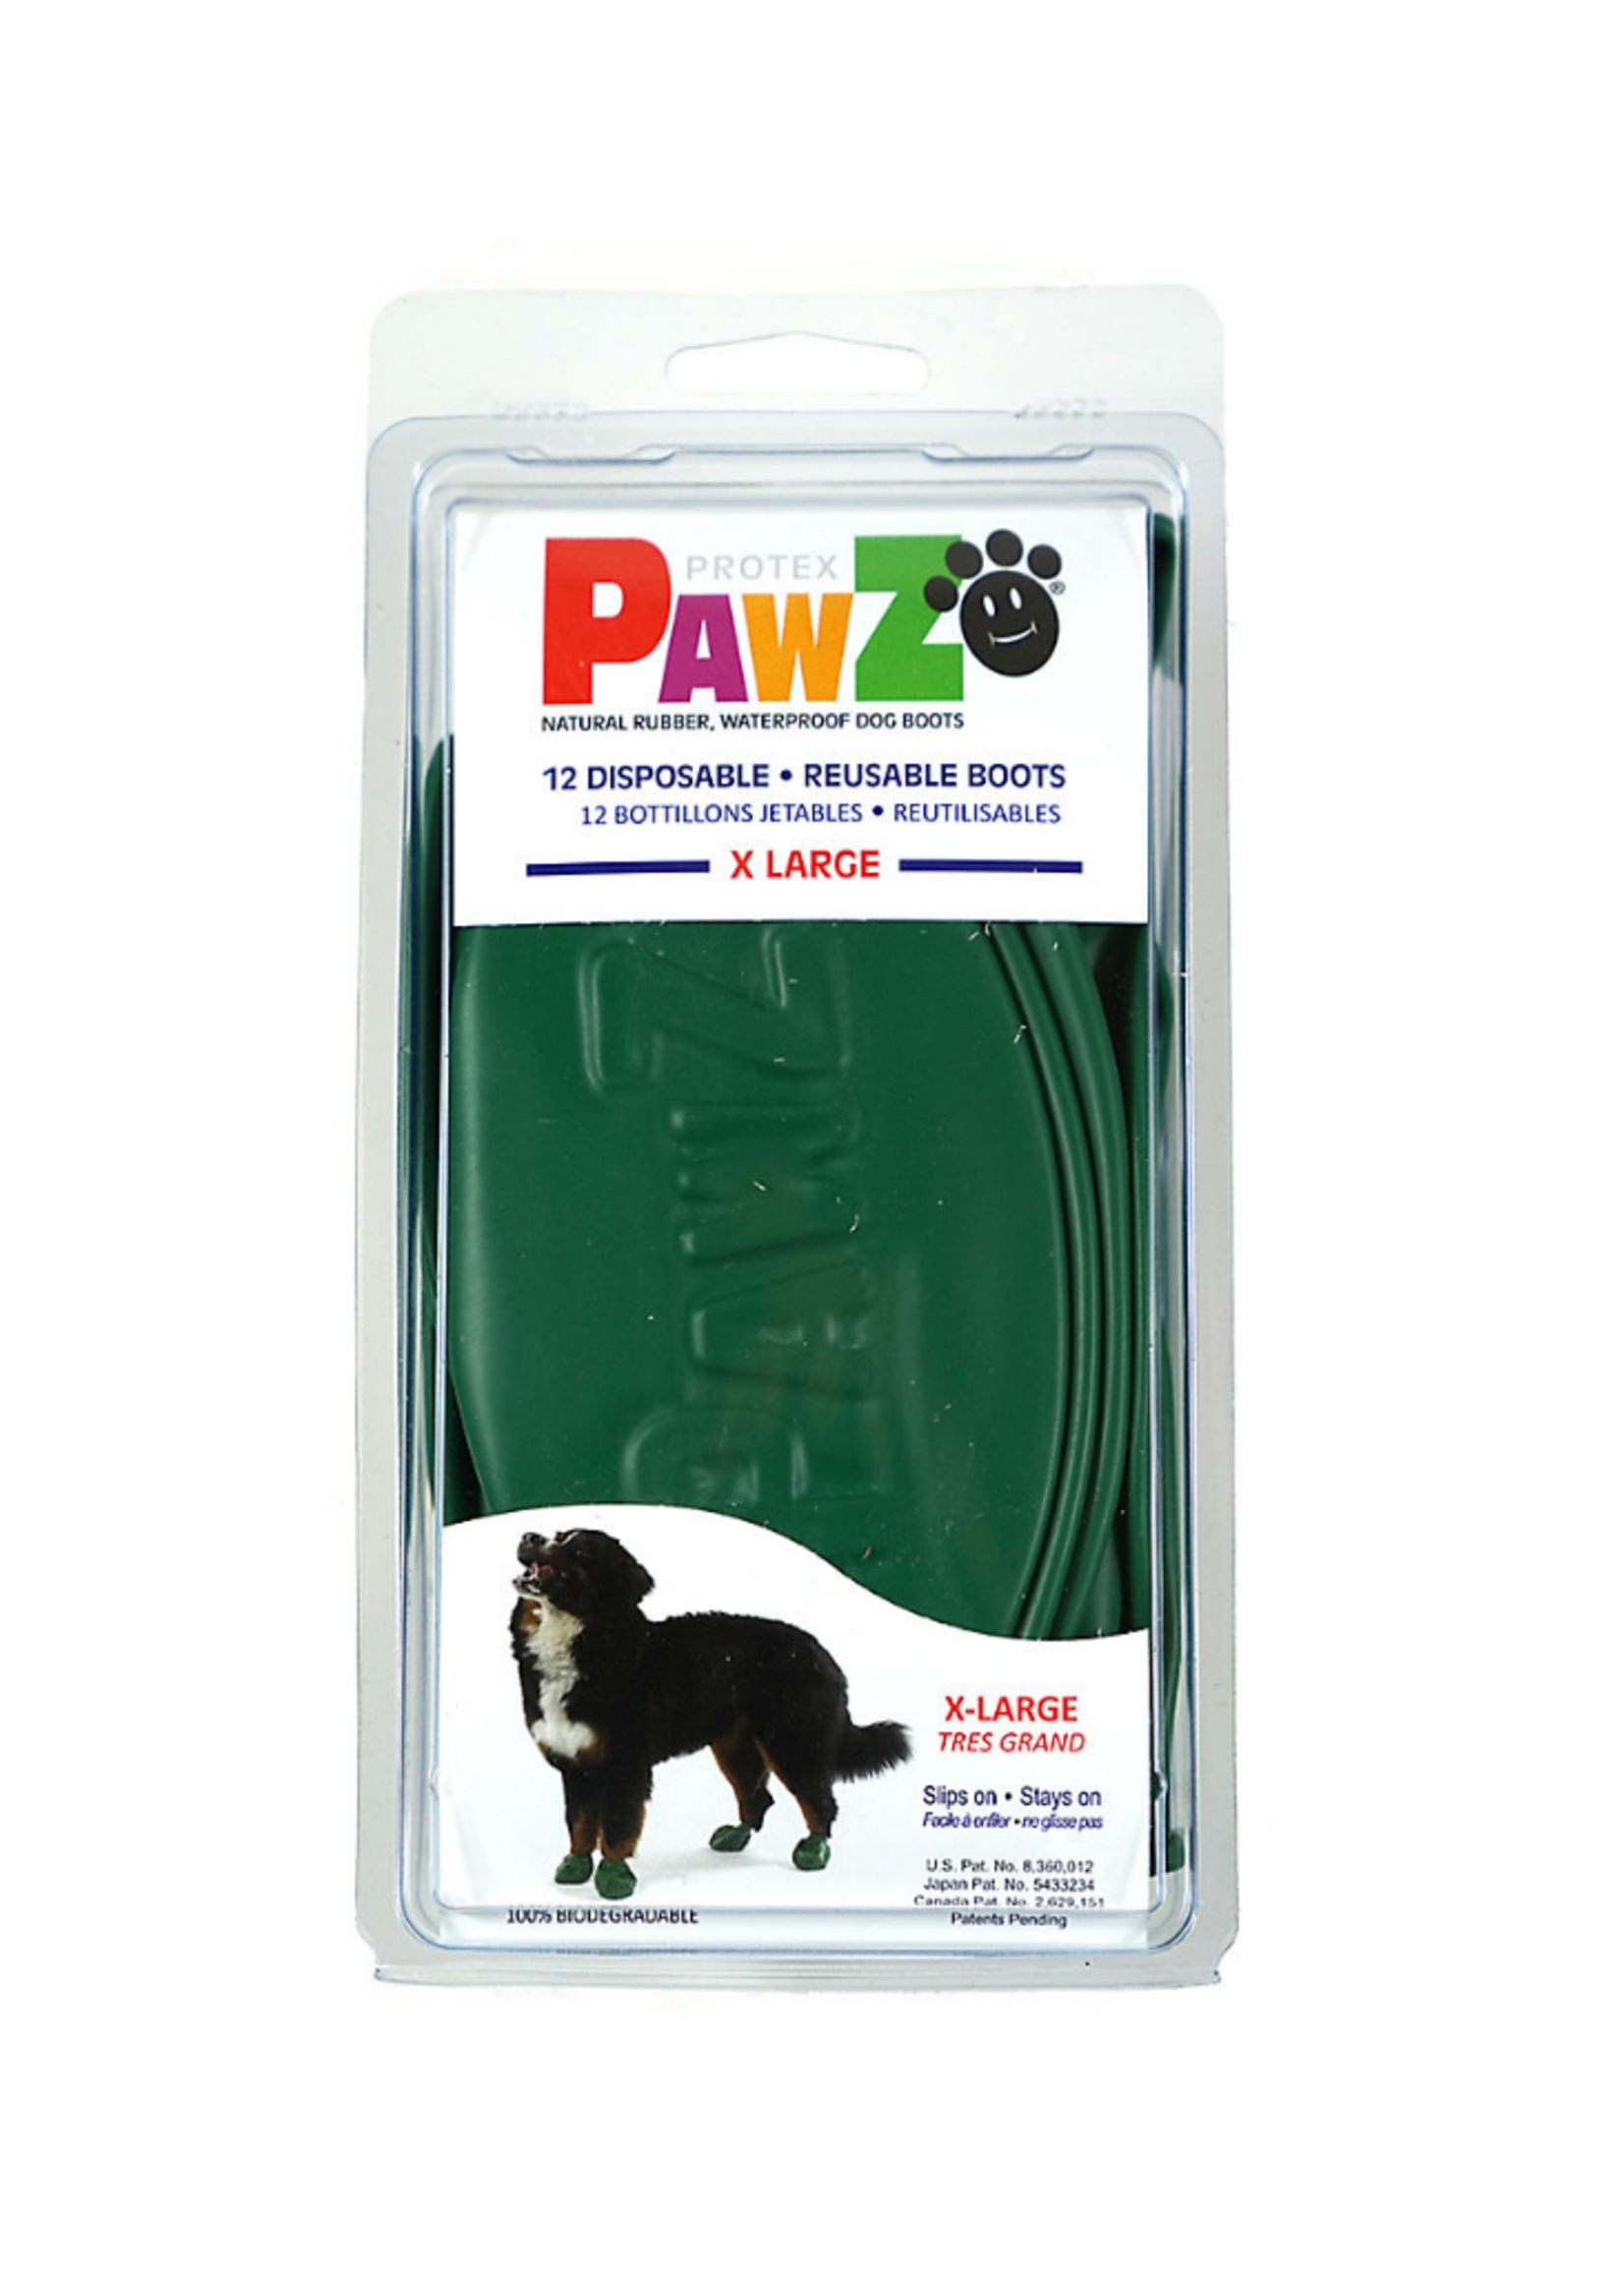 PAWZ Natural Rubber Waterproof Dog Boots